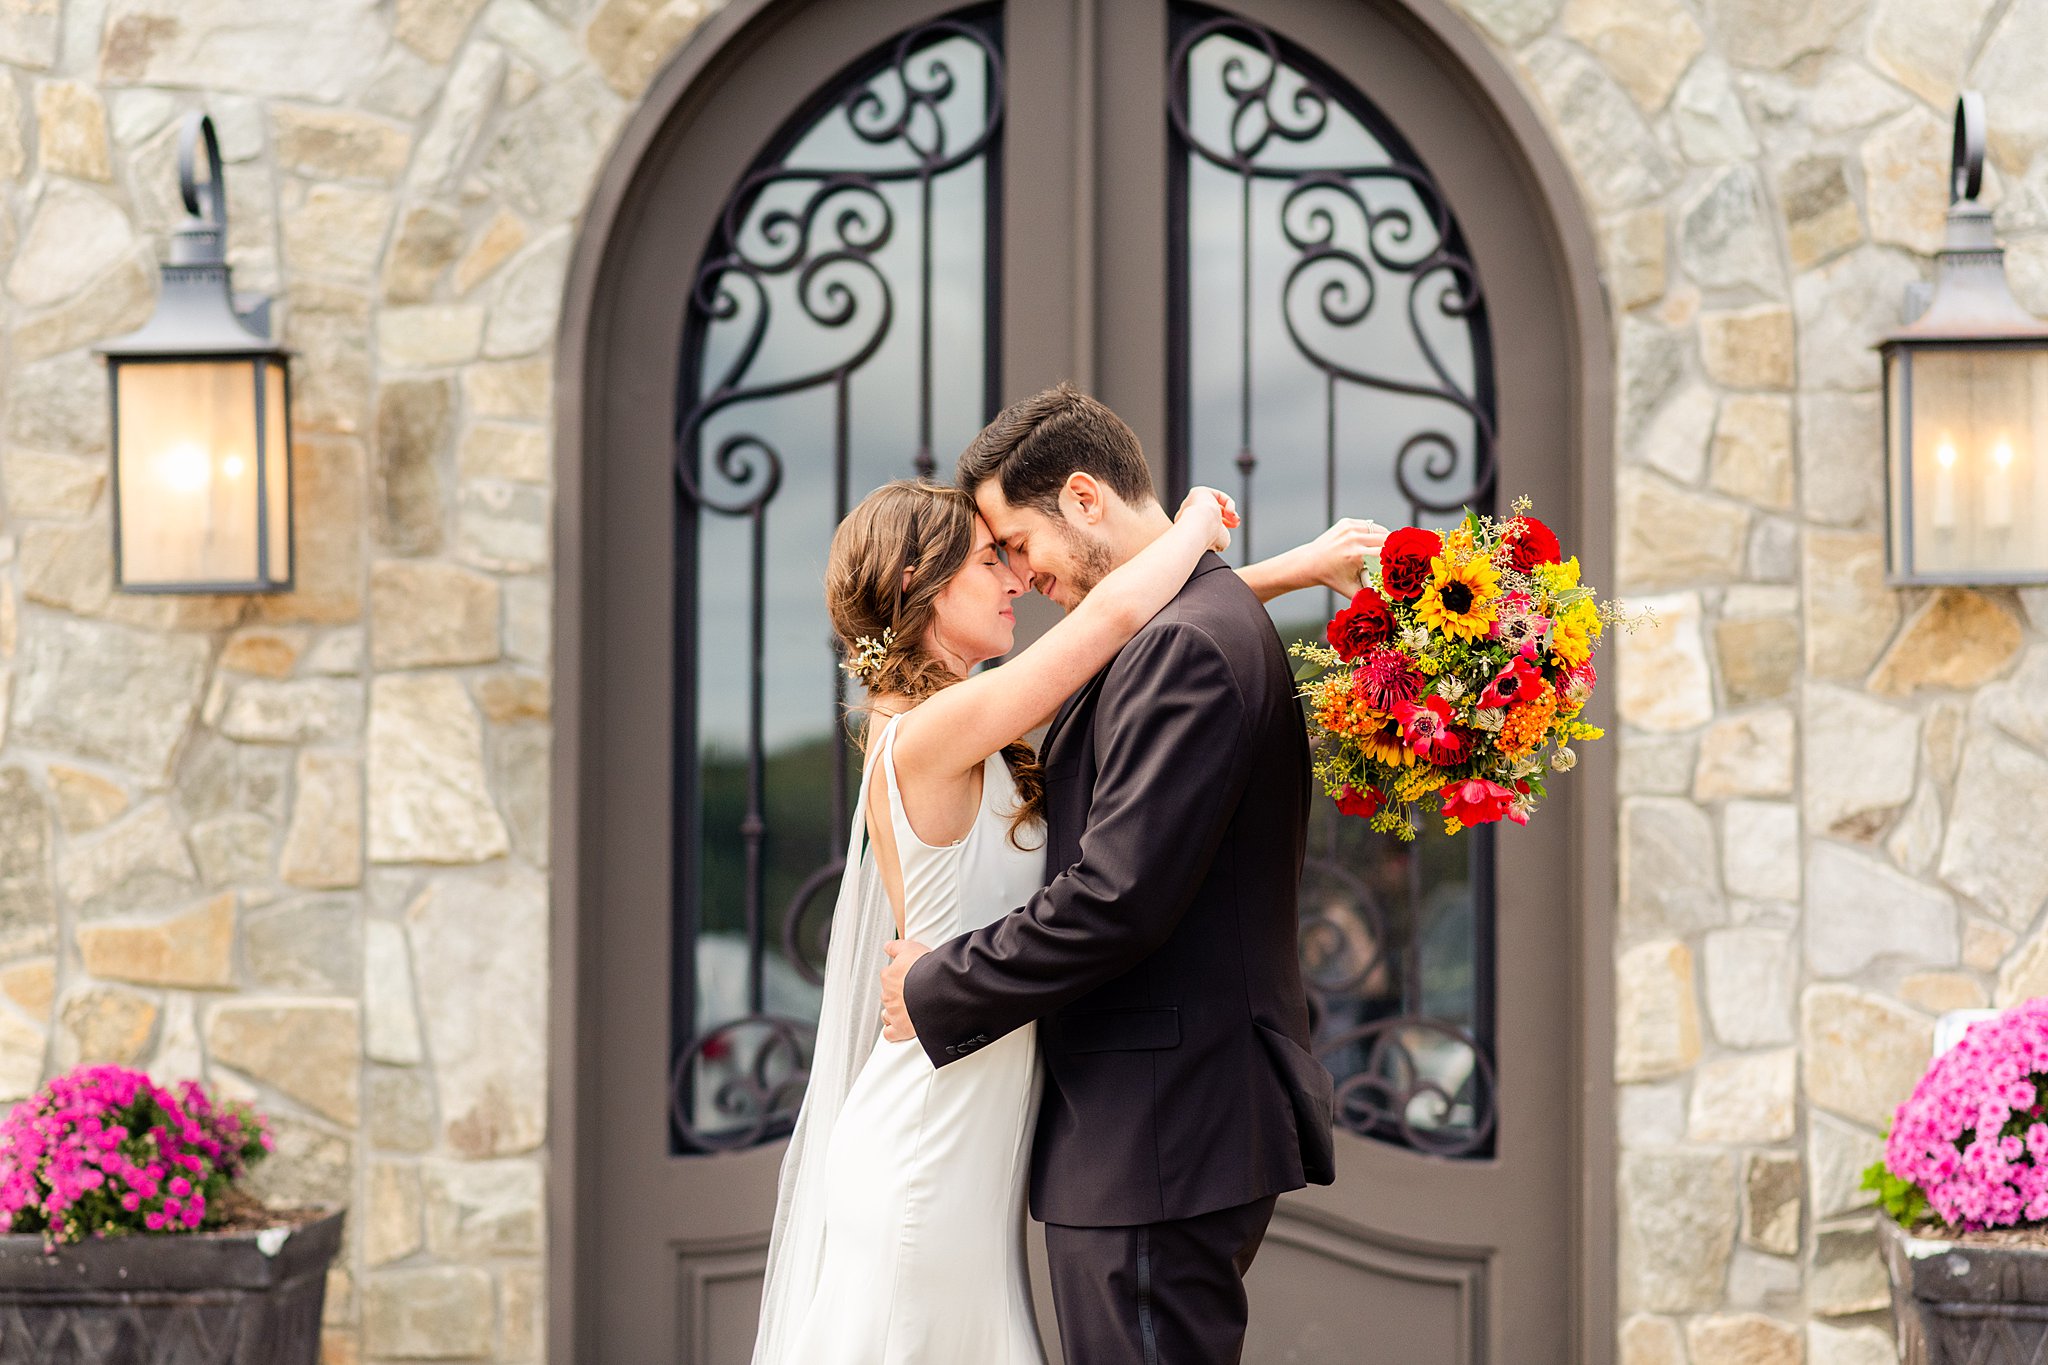 Newlyweds hug in front of a grand entry door framed in stone walls virginia wedding planner